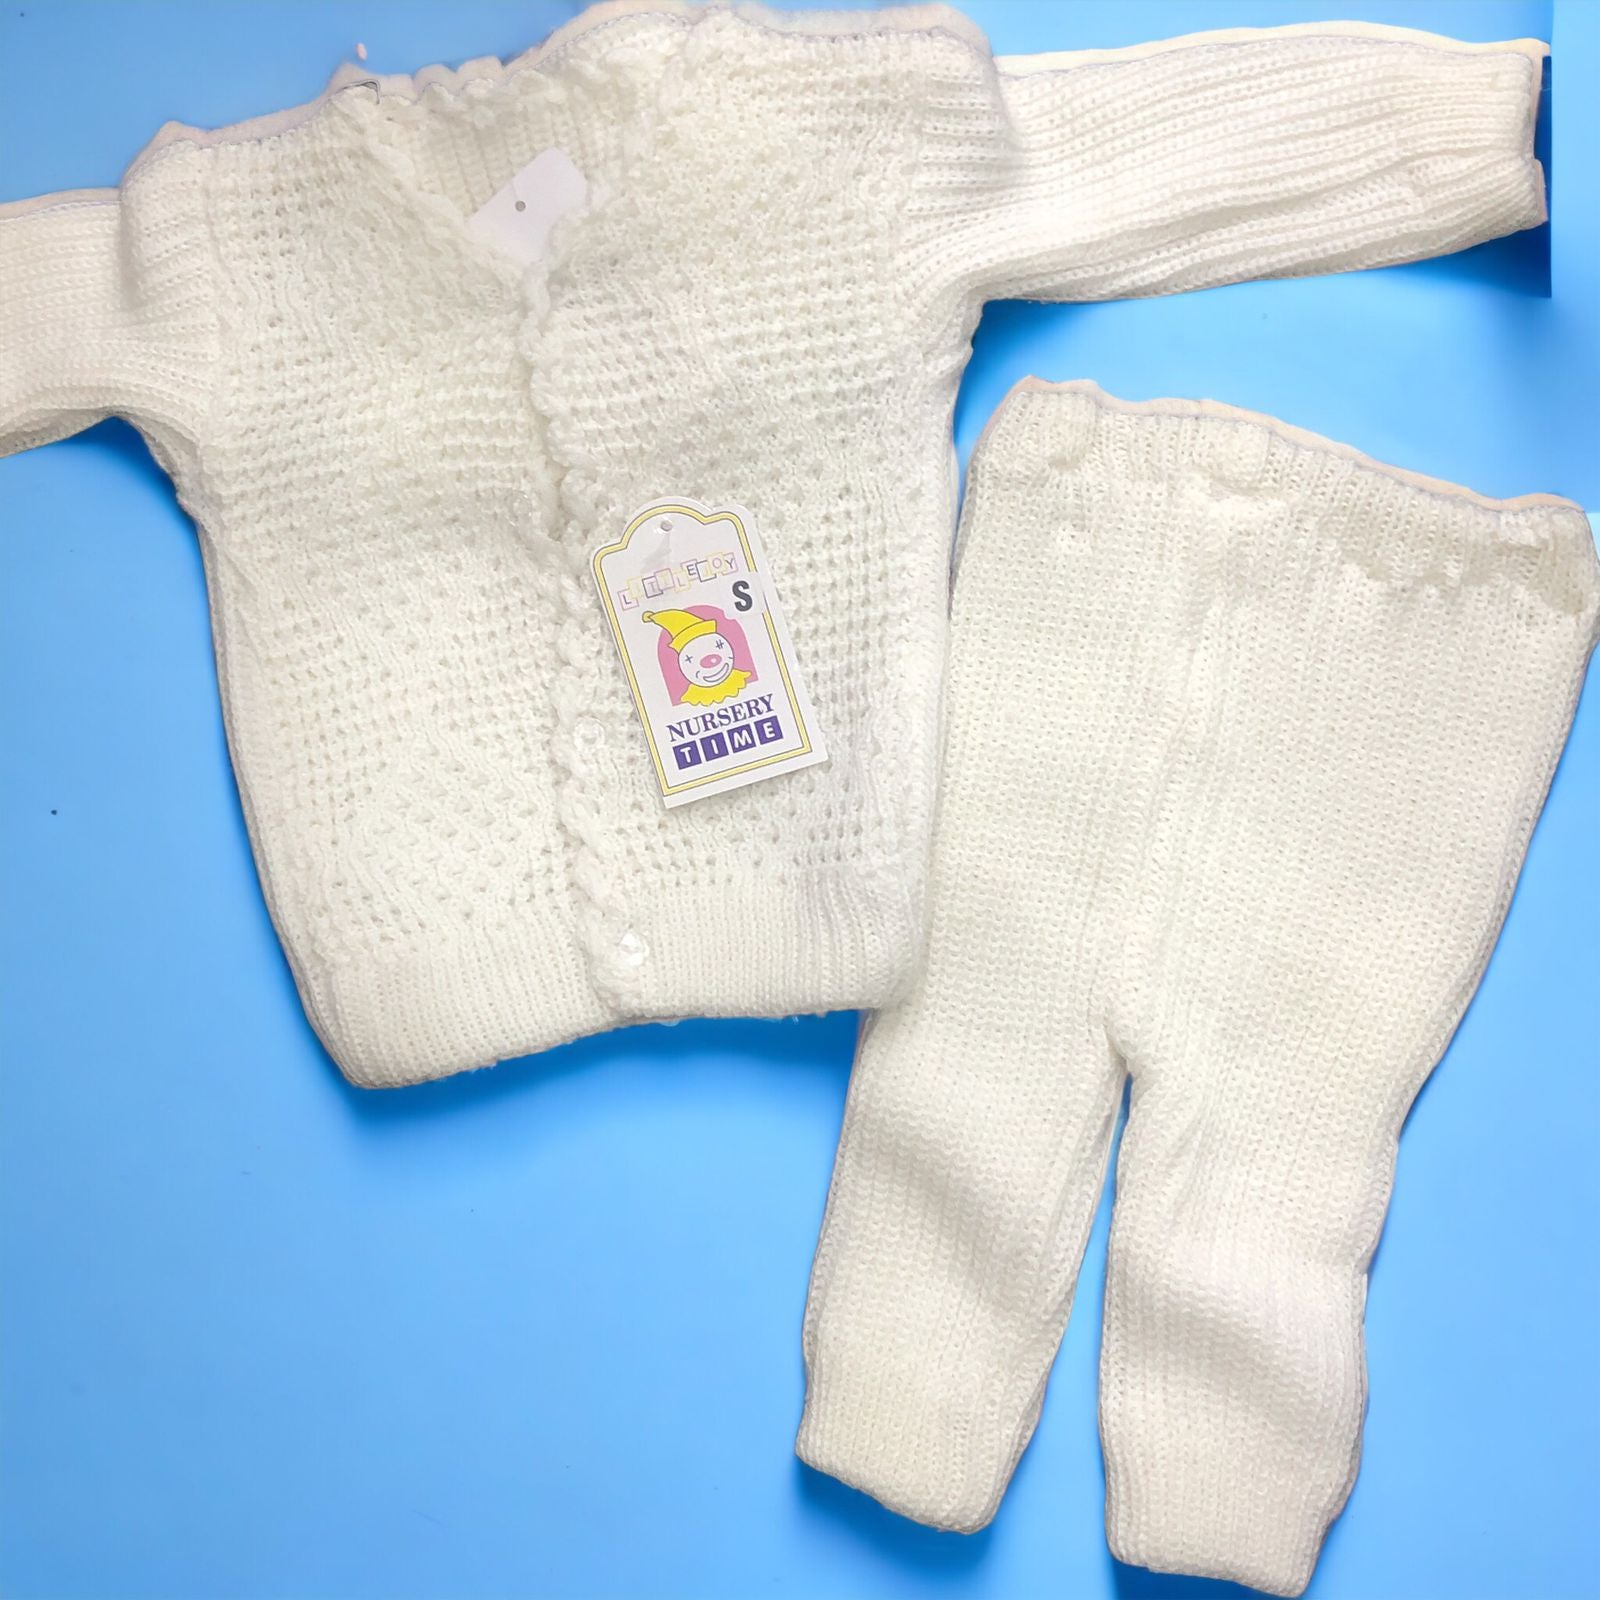 Baby woolen suits 0-3 m white